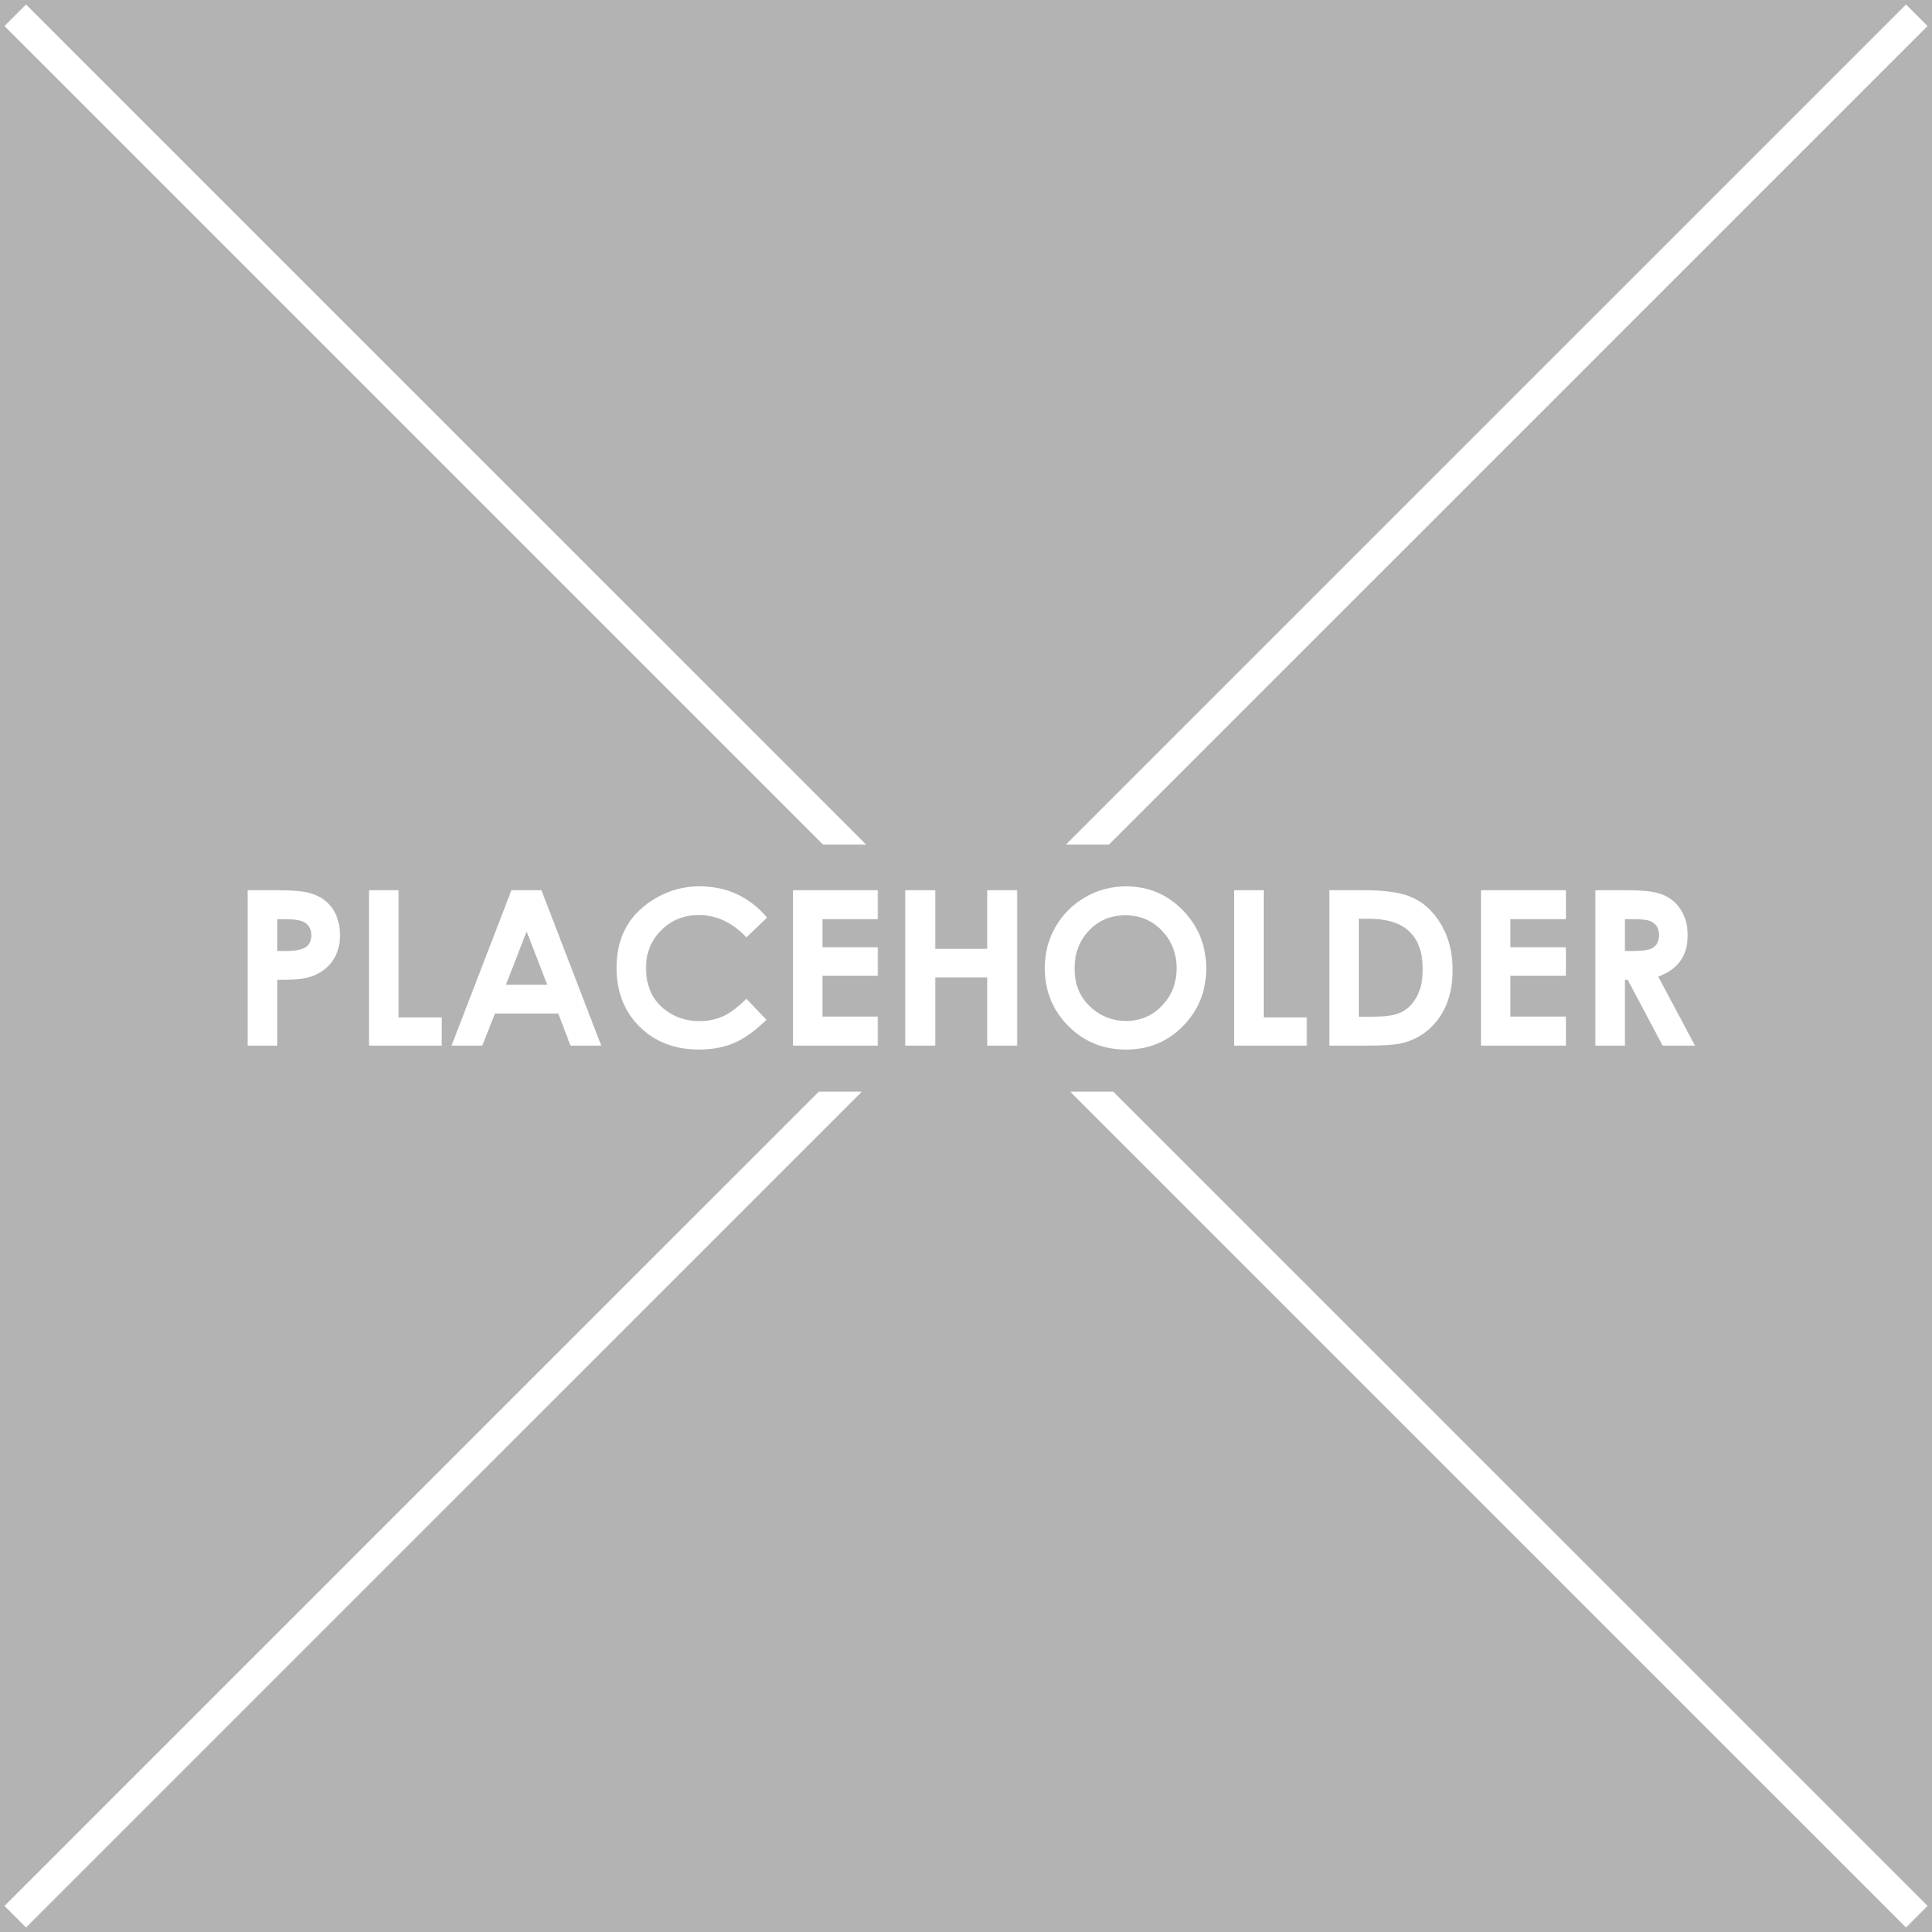 Placeholder - Copy